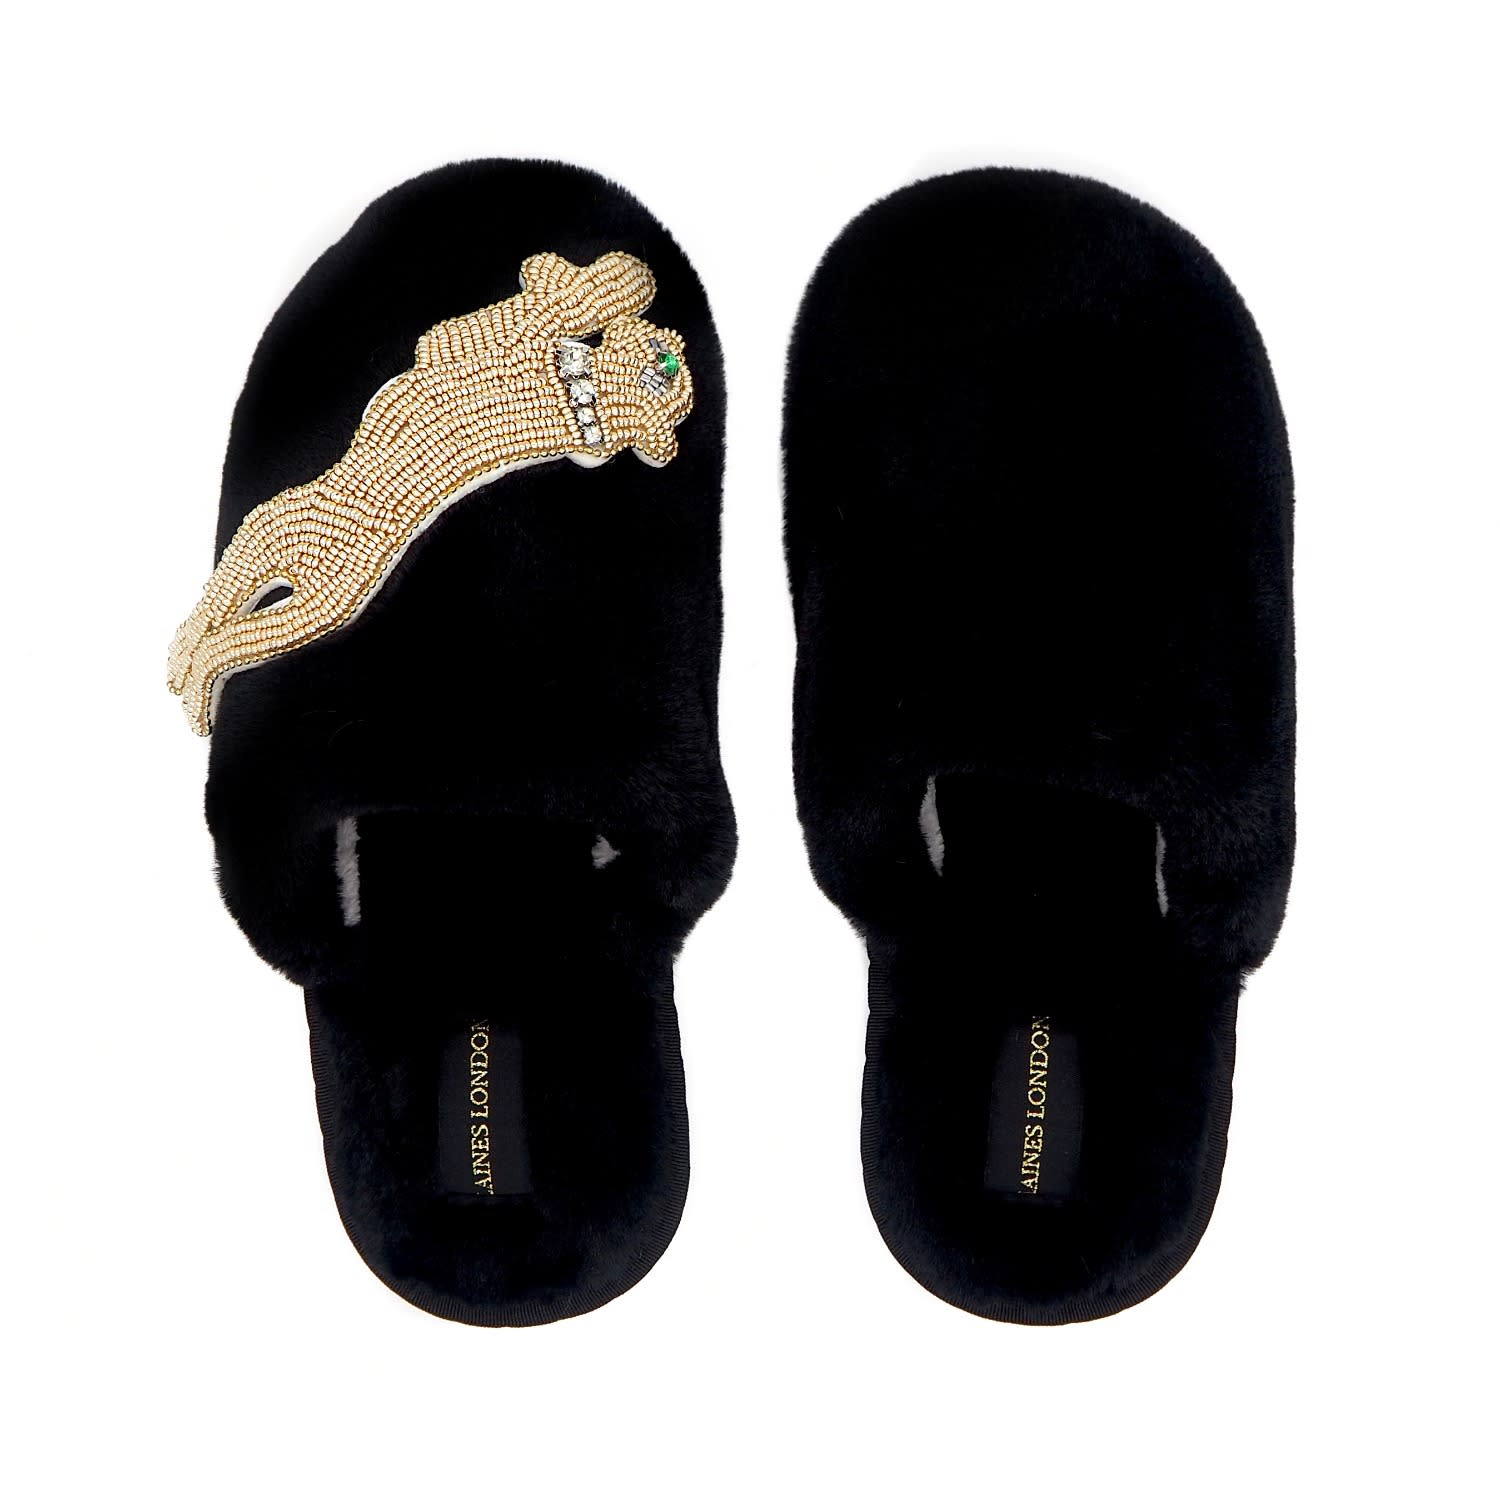 slippers closed toe